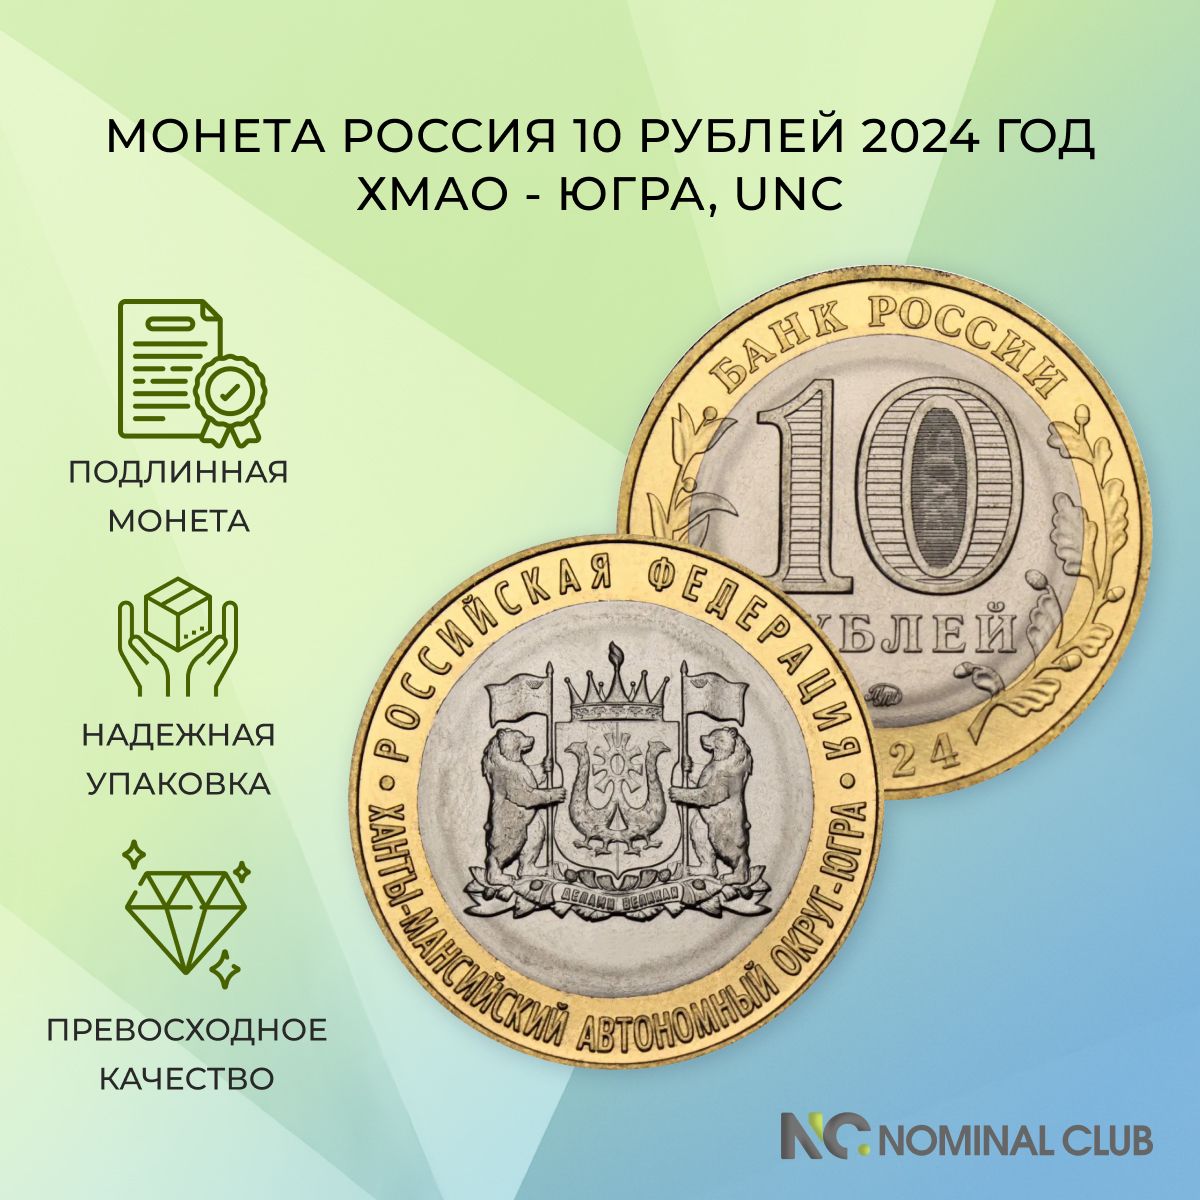 МонетаРоссия10рублей2024год-Ханты-Мансийскийавтономныйокруг-Югра,UNC